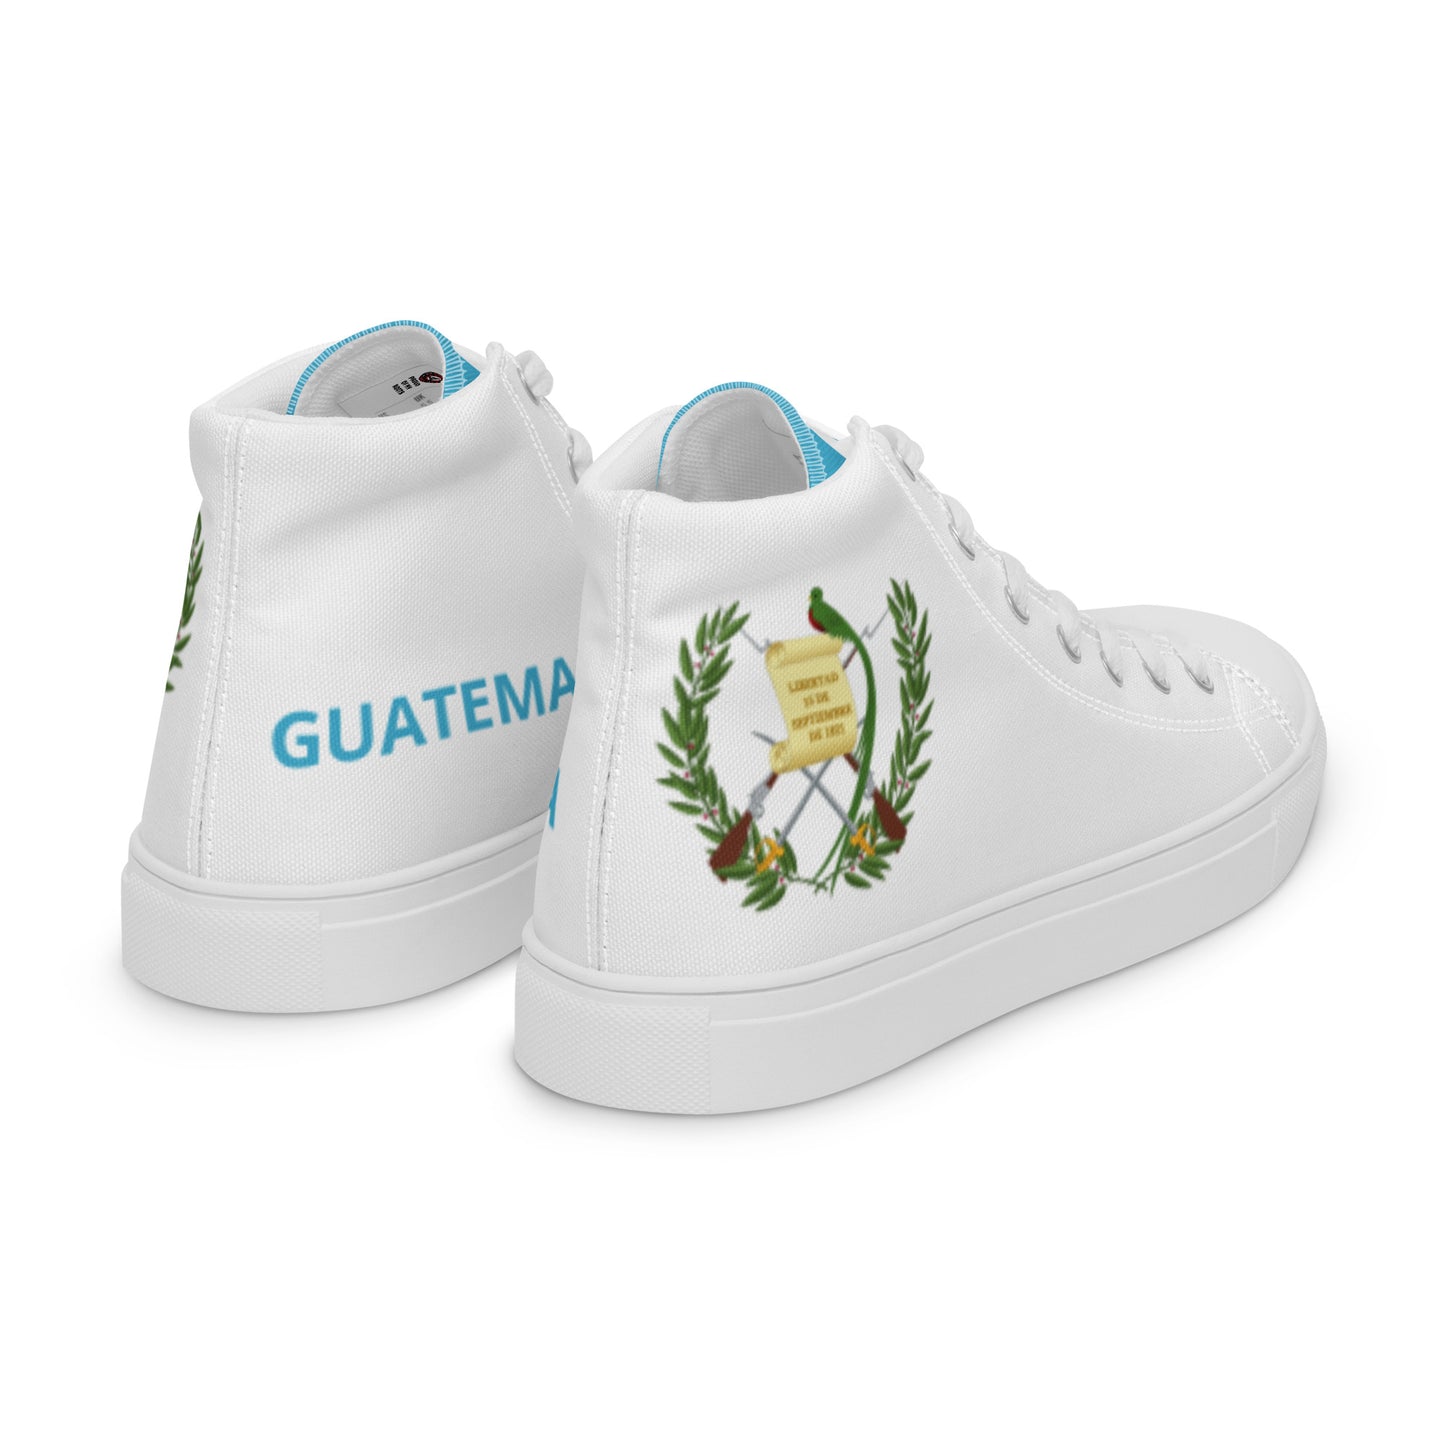 Guatemala - Men - White - High top canvas shoes